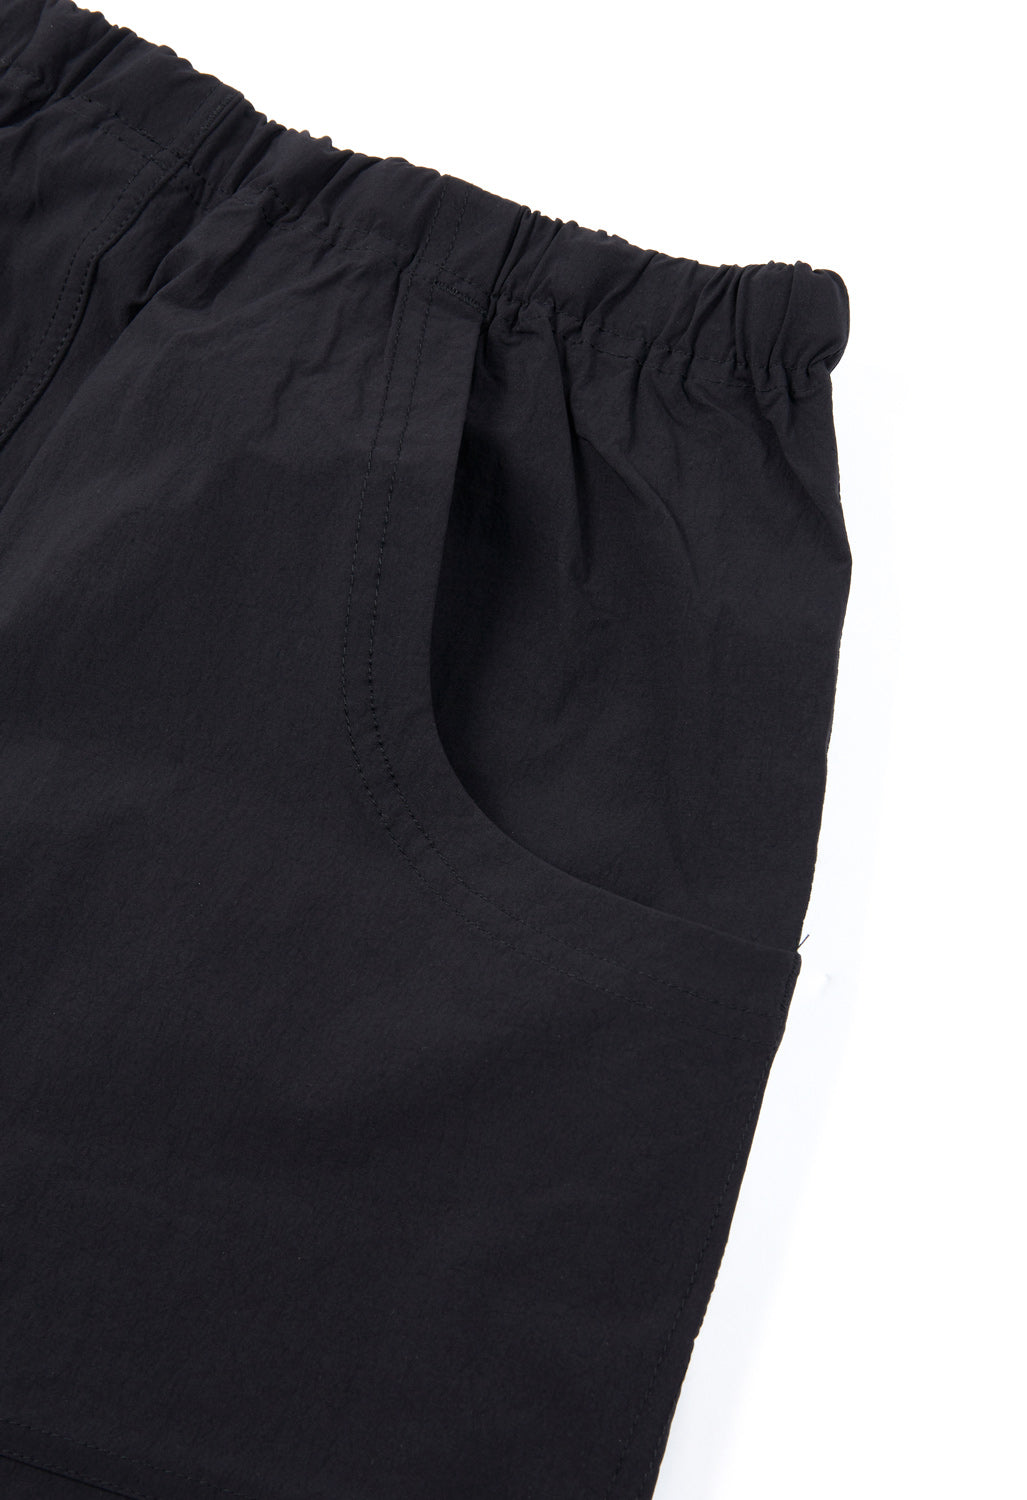 Pa'lante Packs Shorts - Black